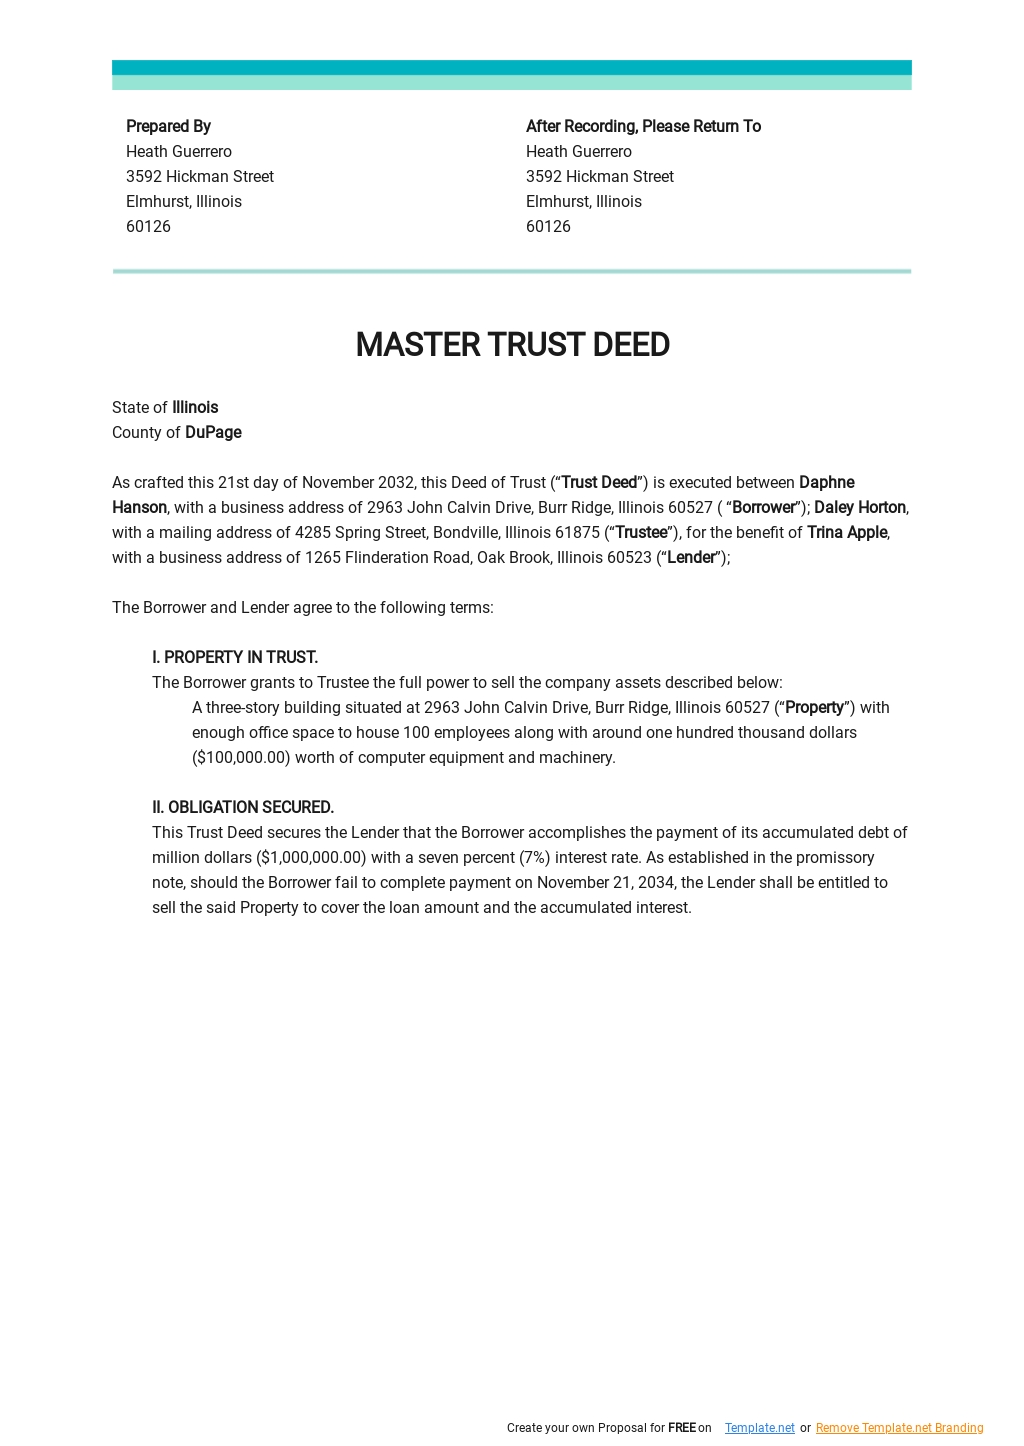 Master Trust Deed Template